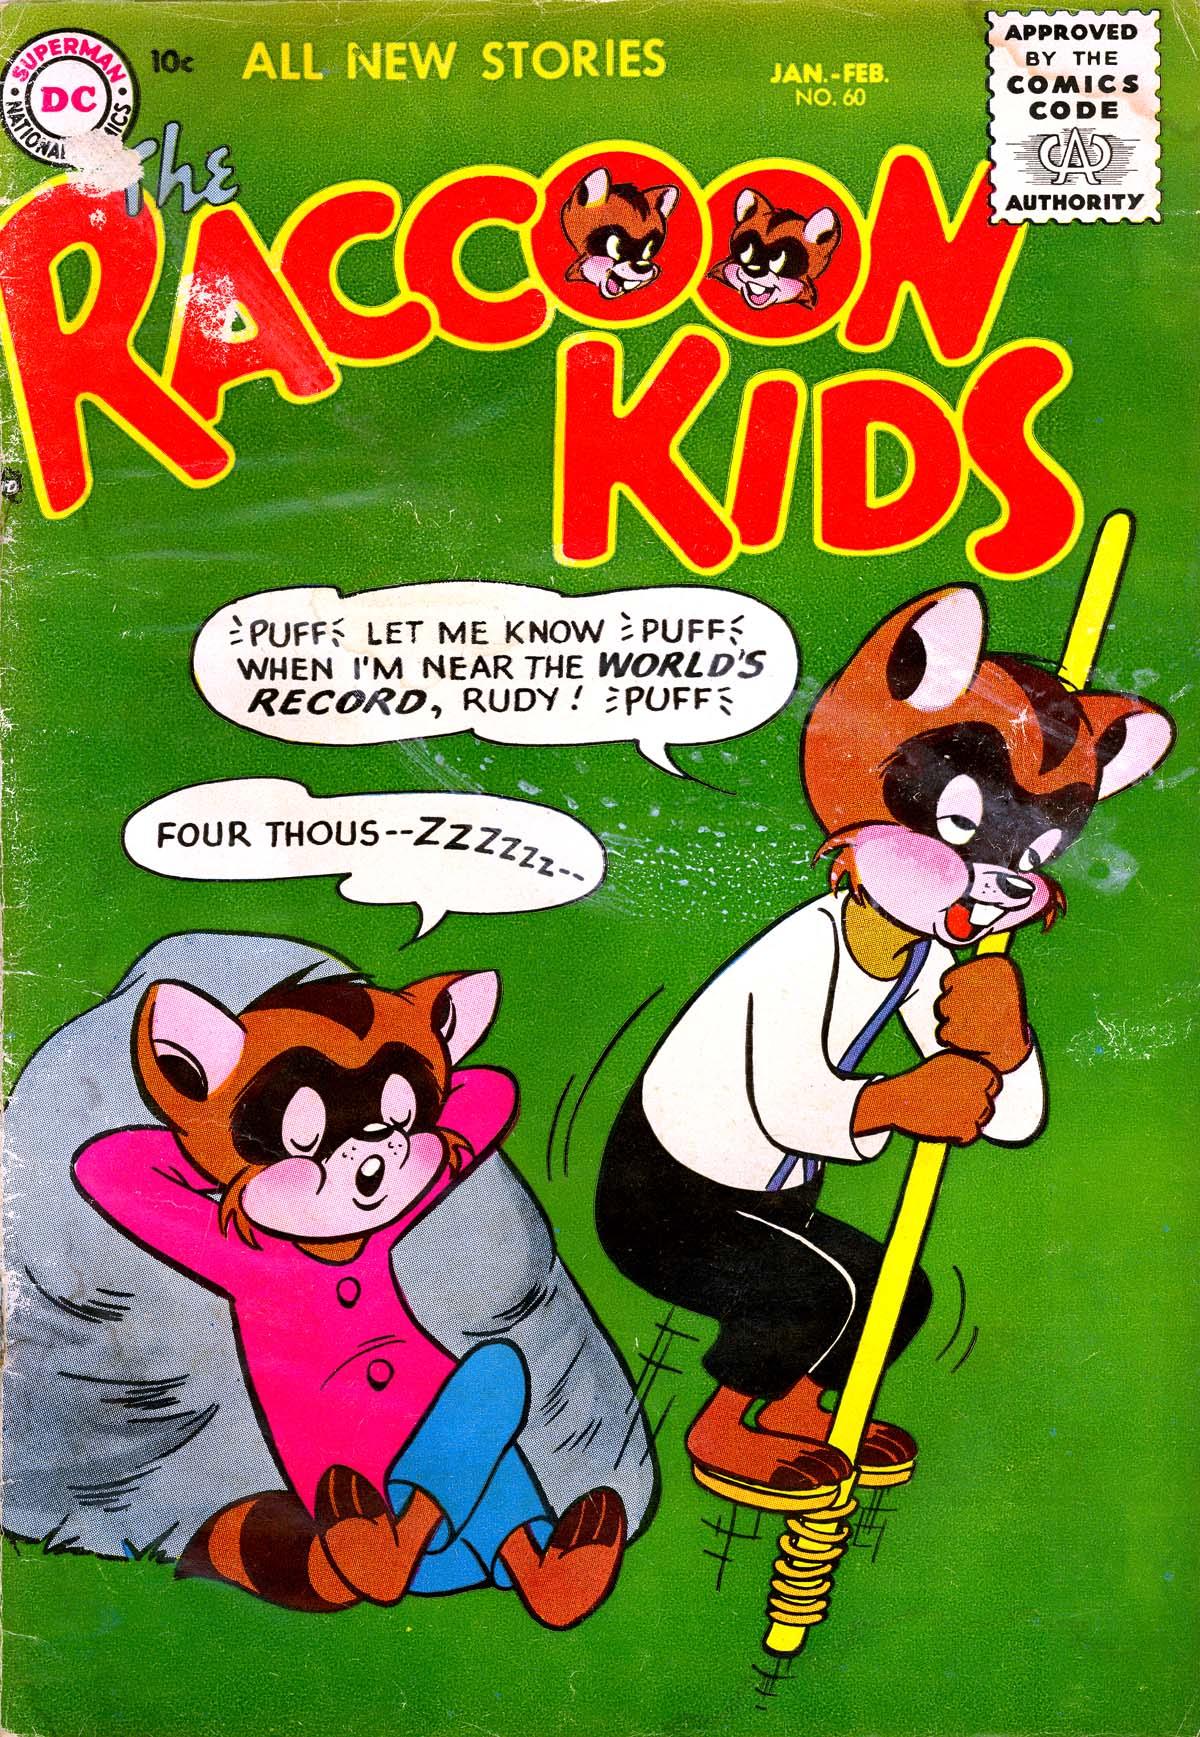 Raccoon Kids Vol. 1 #60